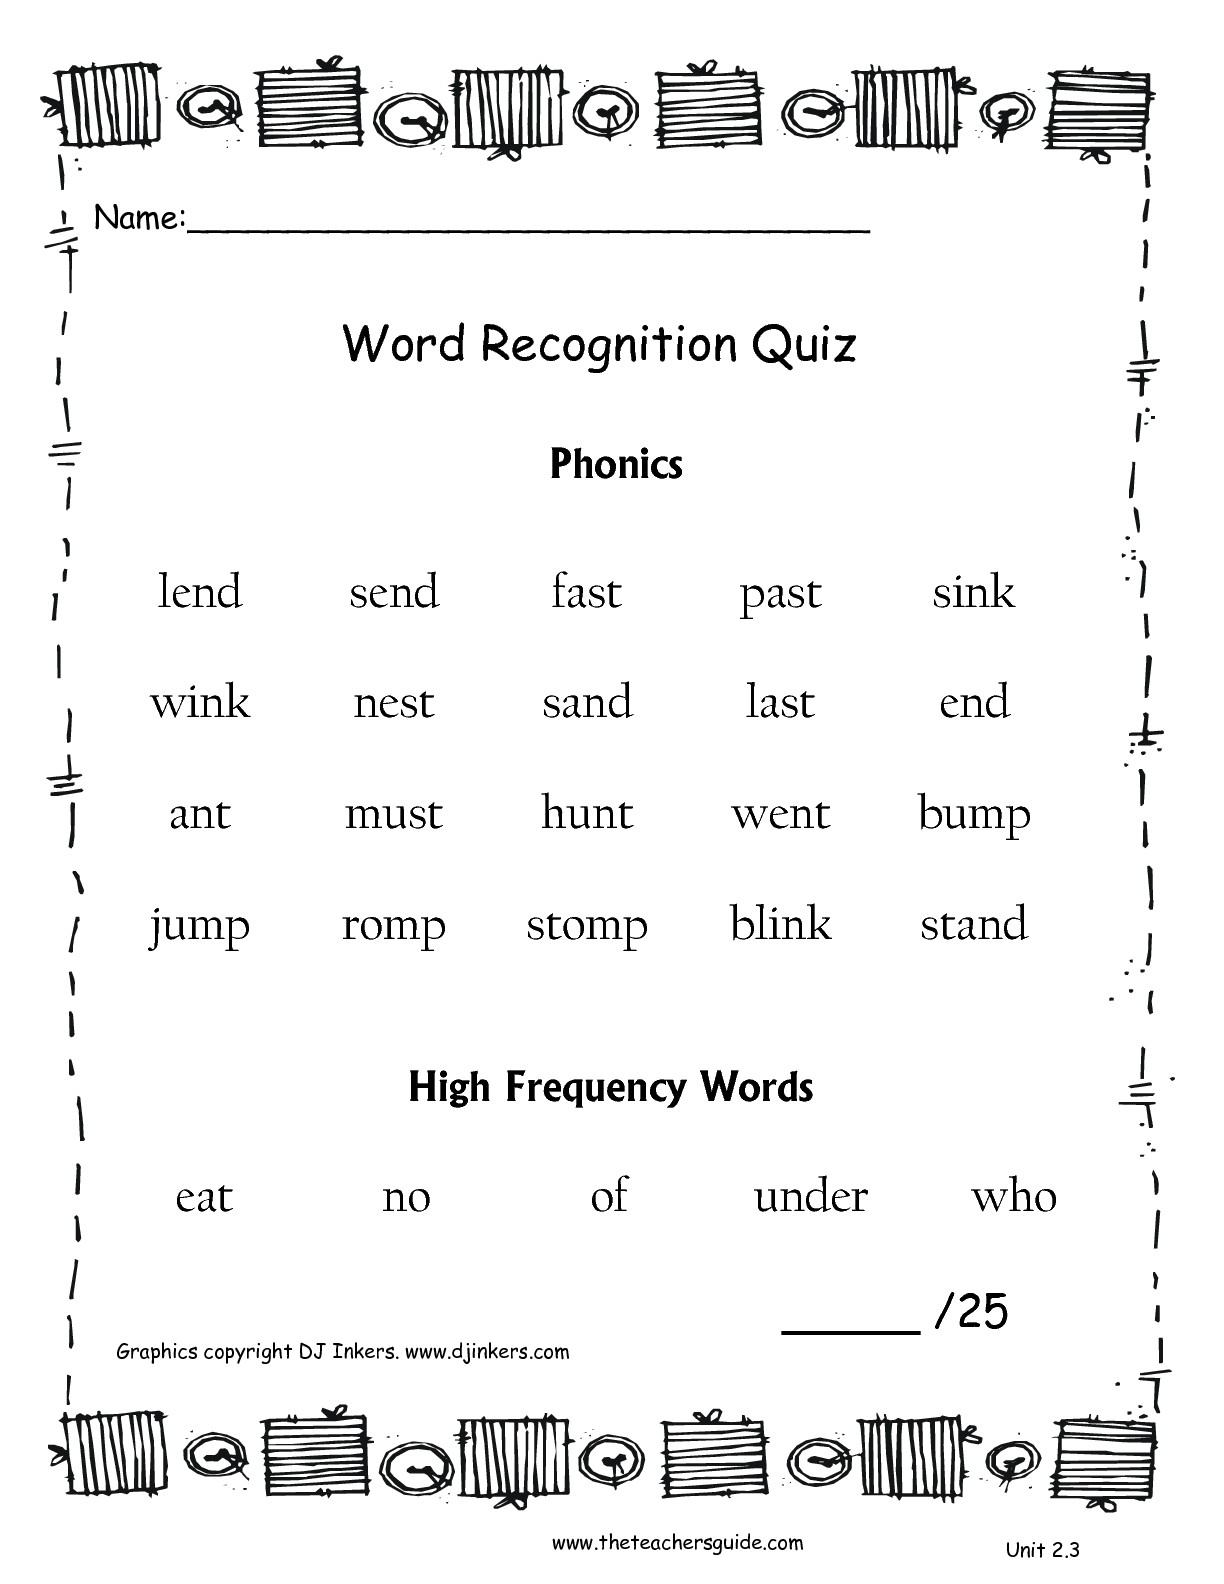 16 Best Images of Guide Words Worksheet 5th Grade ...